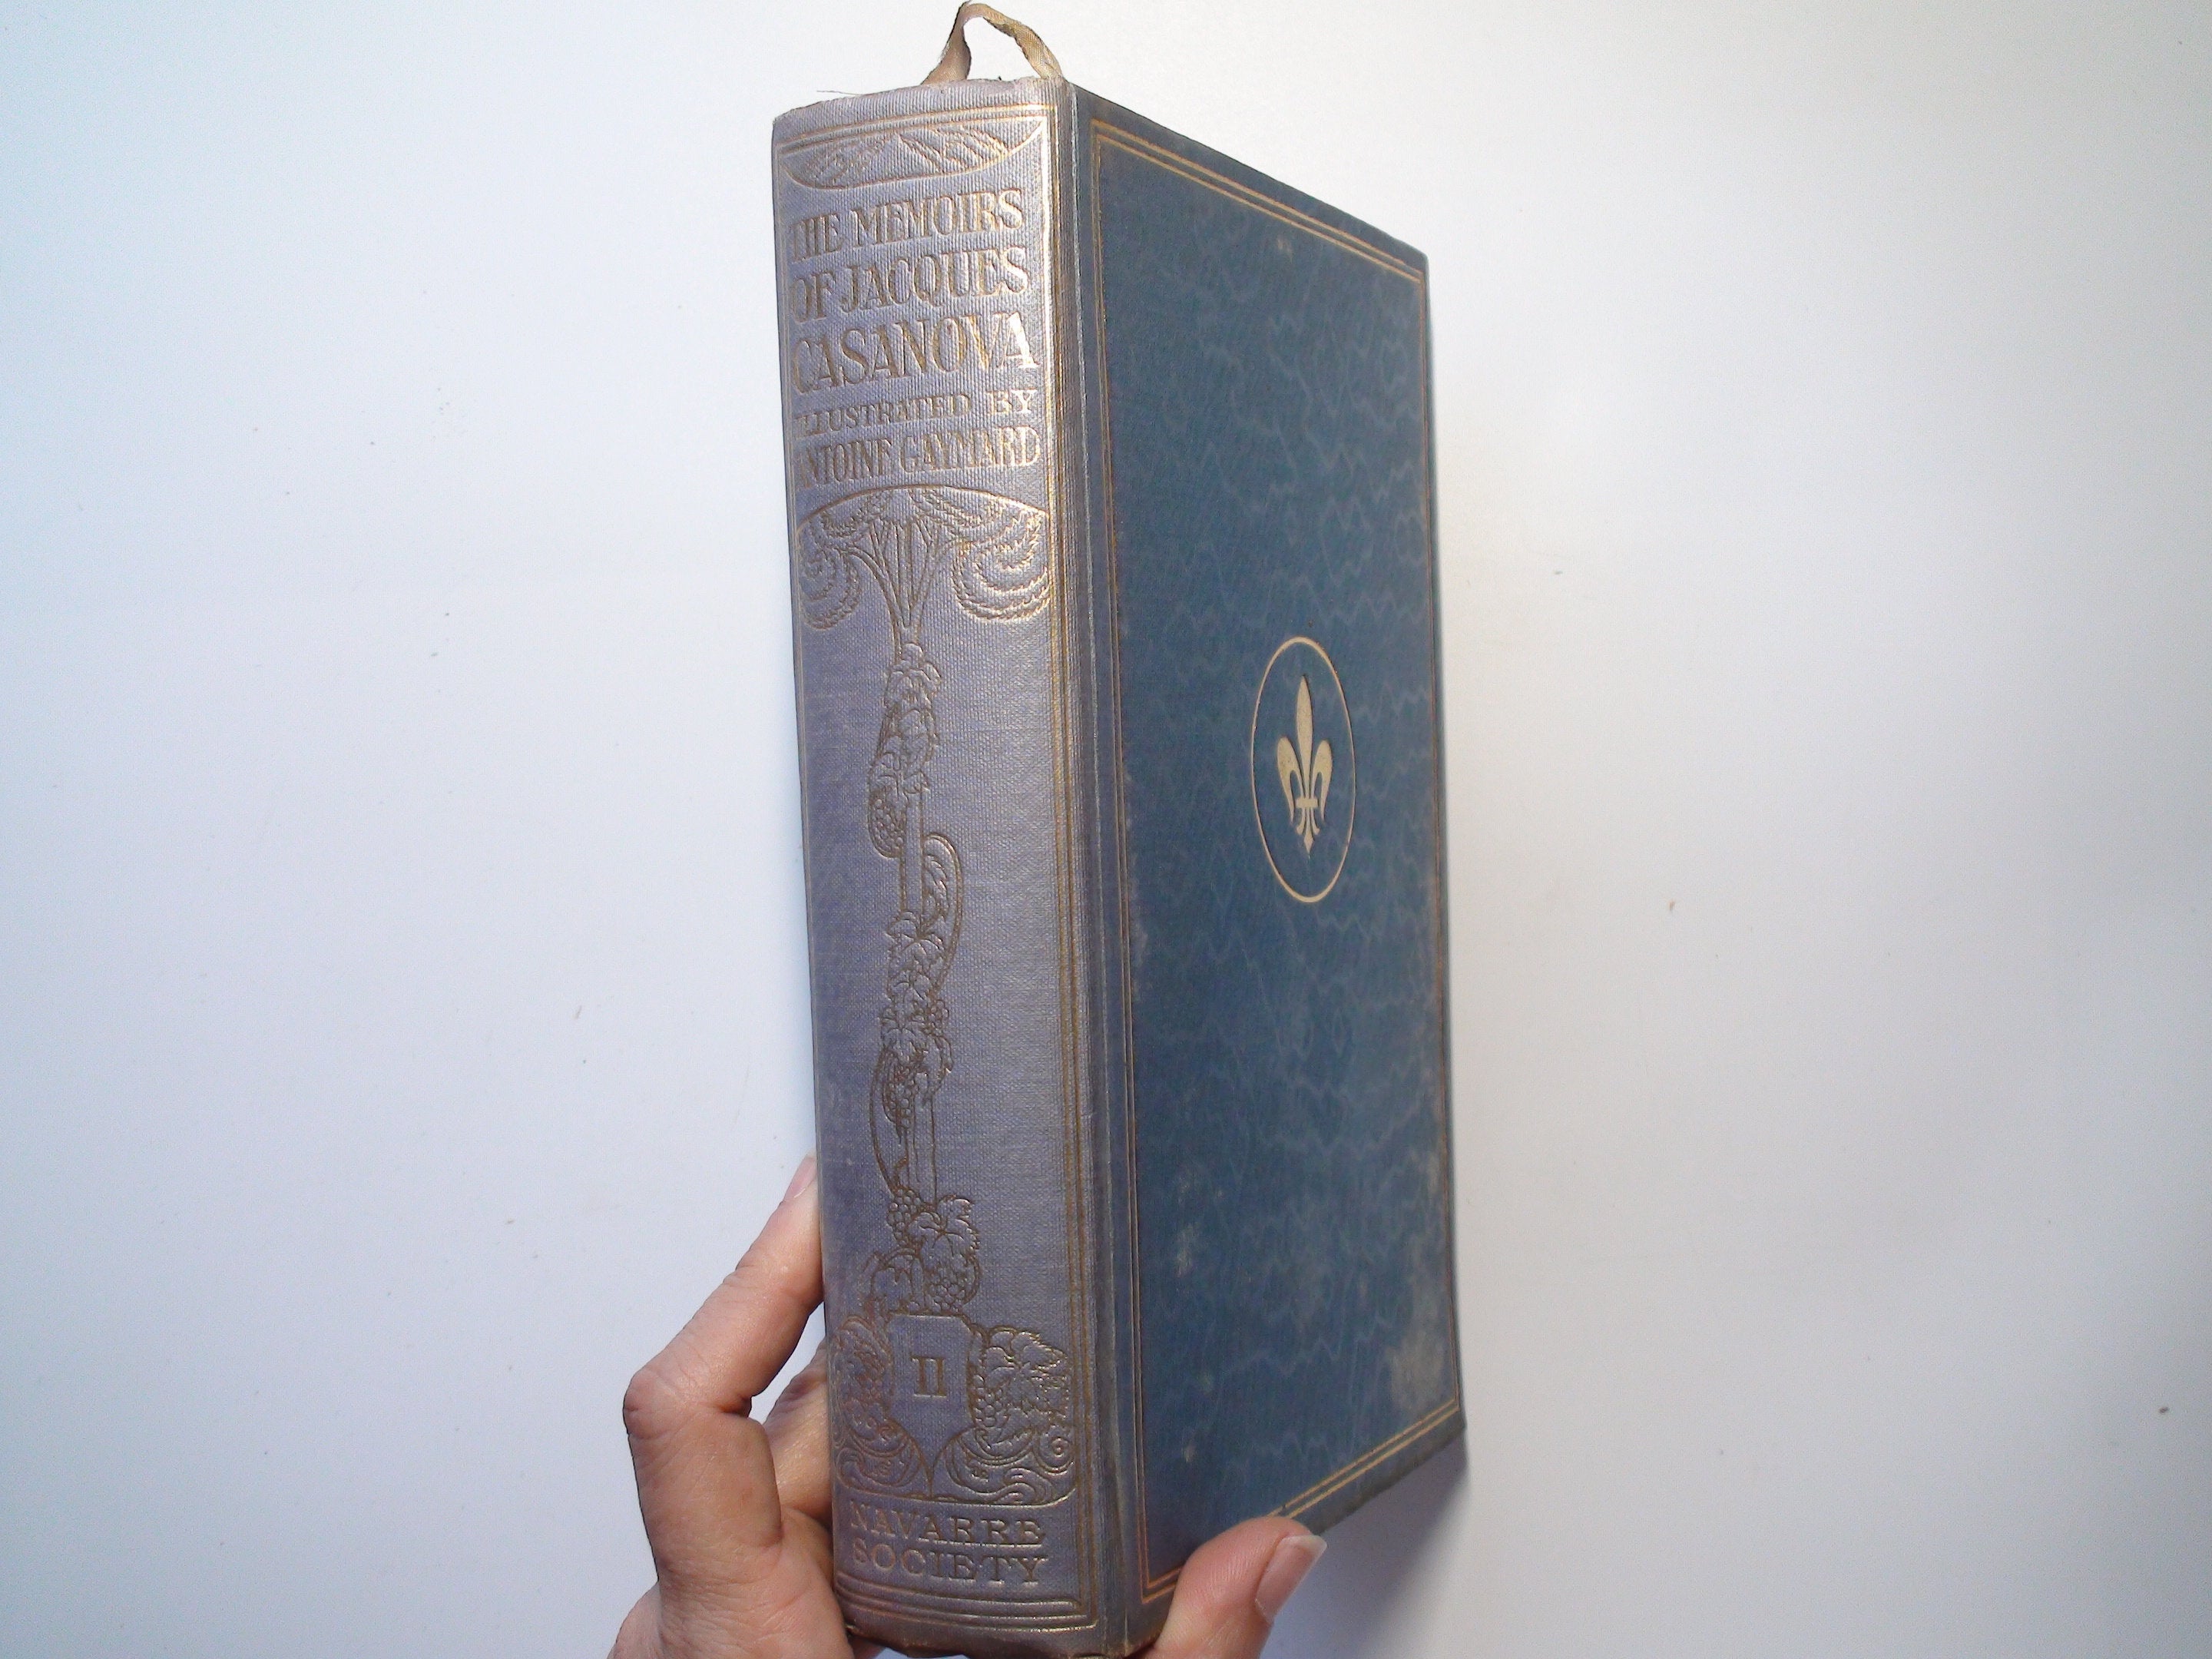 The Memoirs of Jacques Casanova, Illustrated by Antoine Gaymard, Vol II, 1922